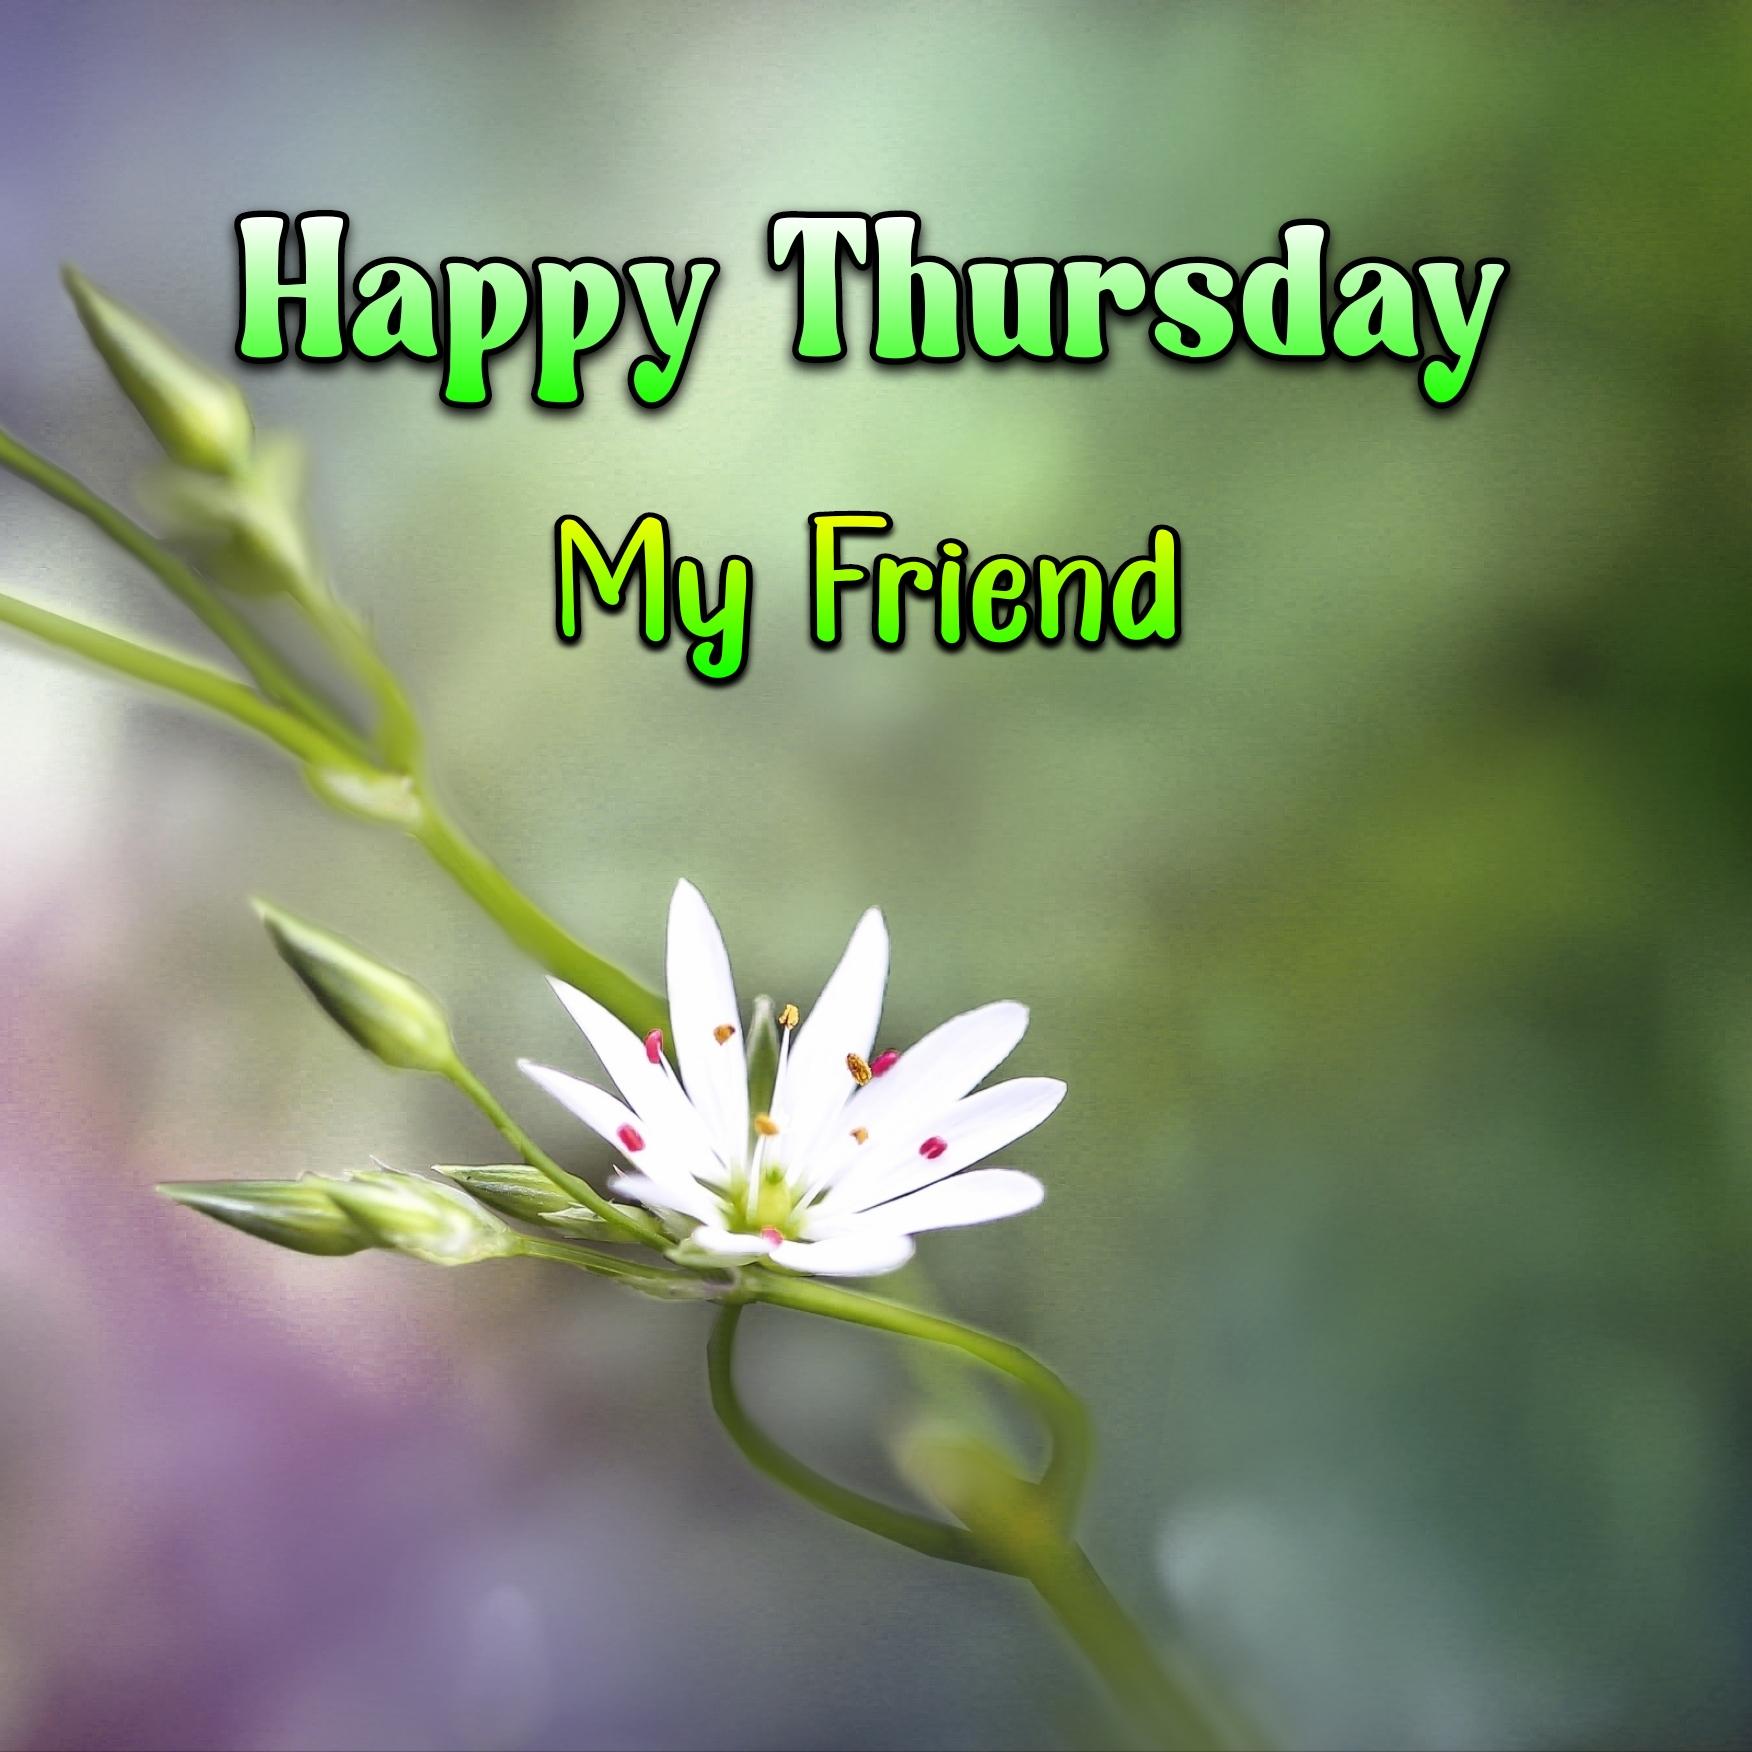 Happy Thursday My Friend Images